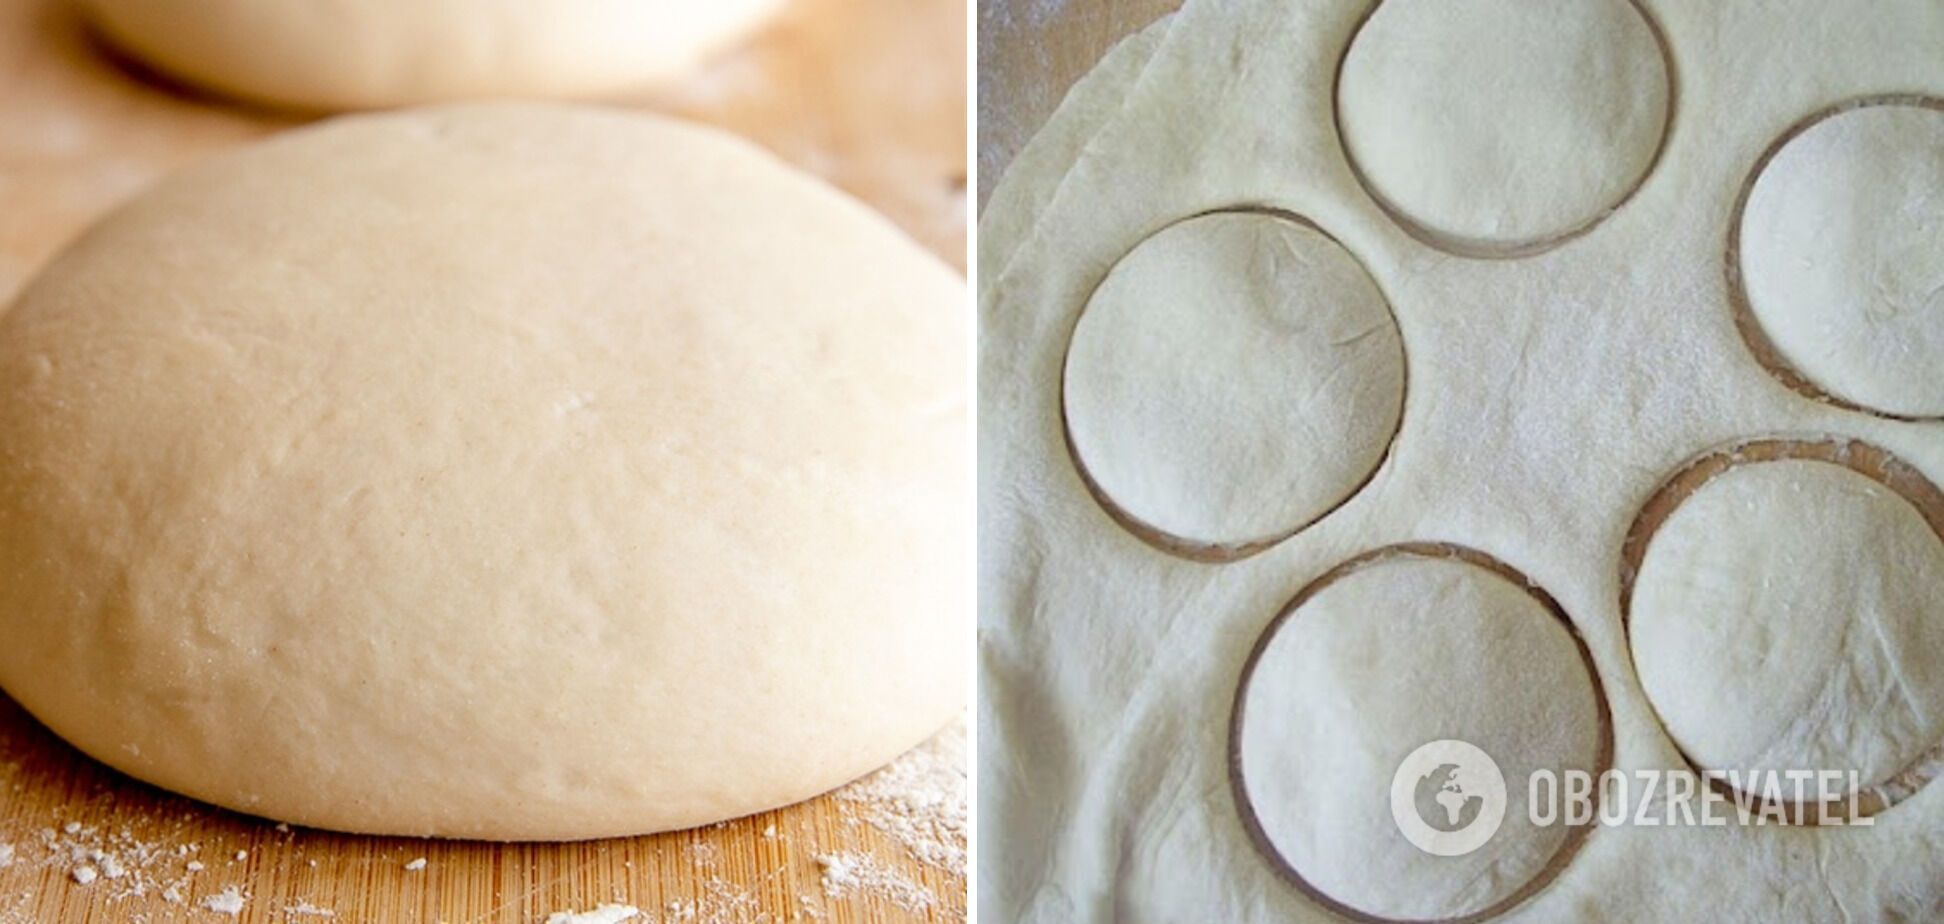 Ready-made dough for dumplings